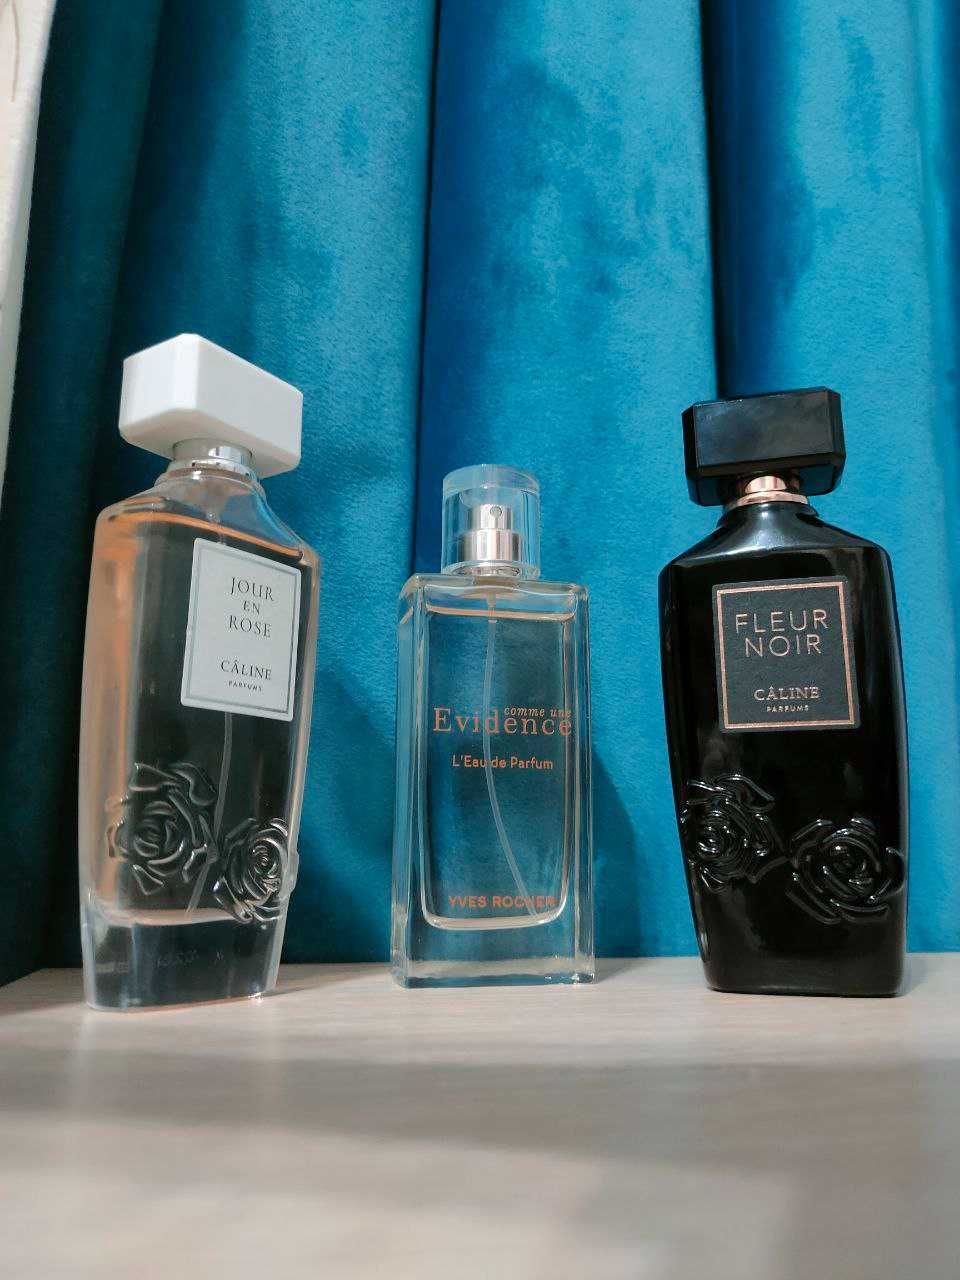 CALINE parfums,Yves rocher